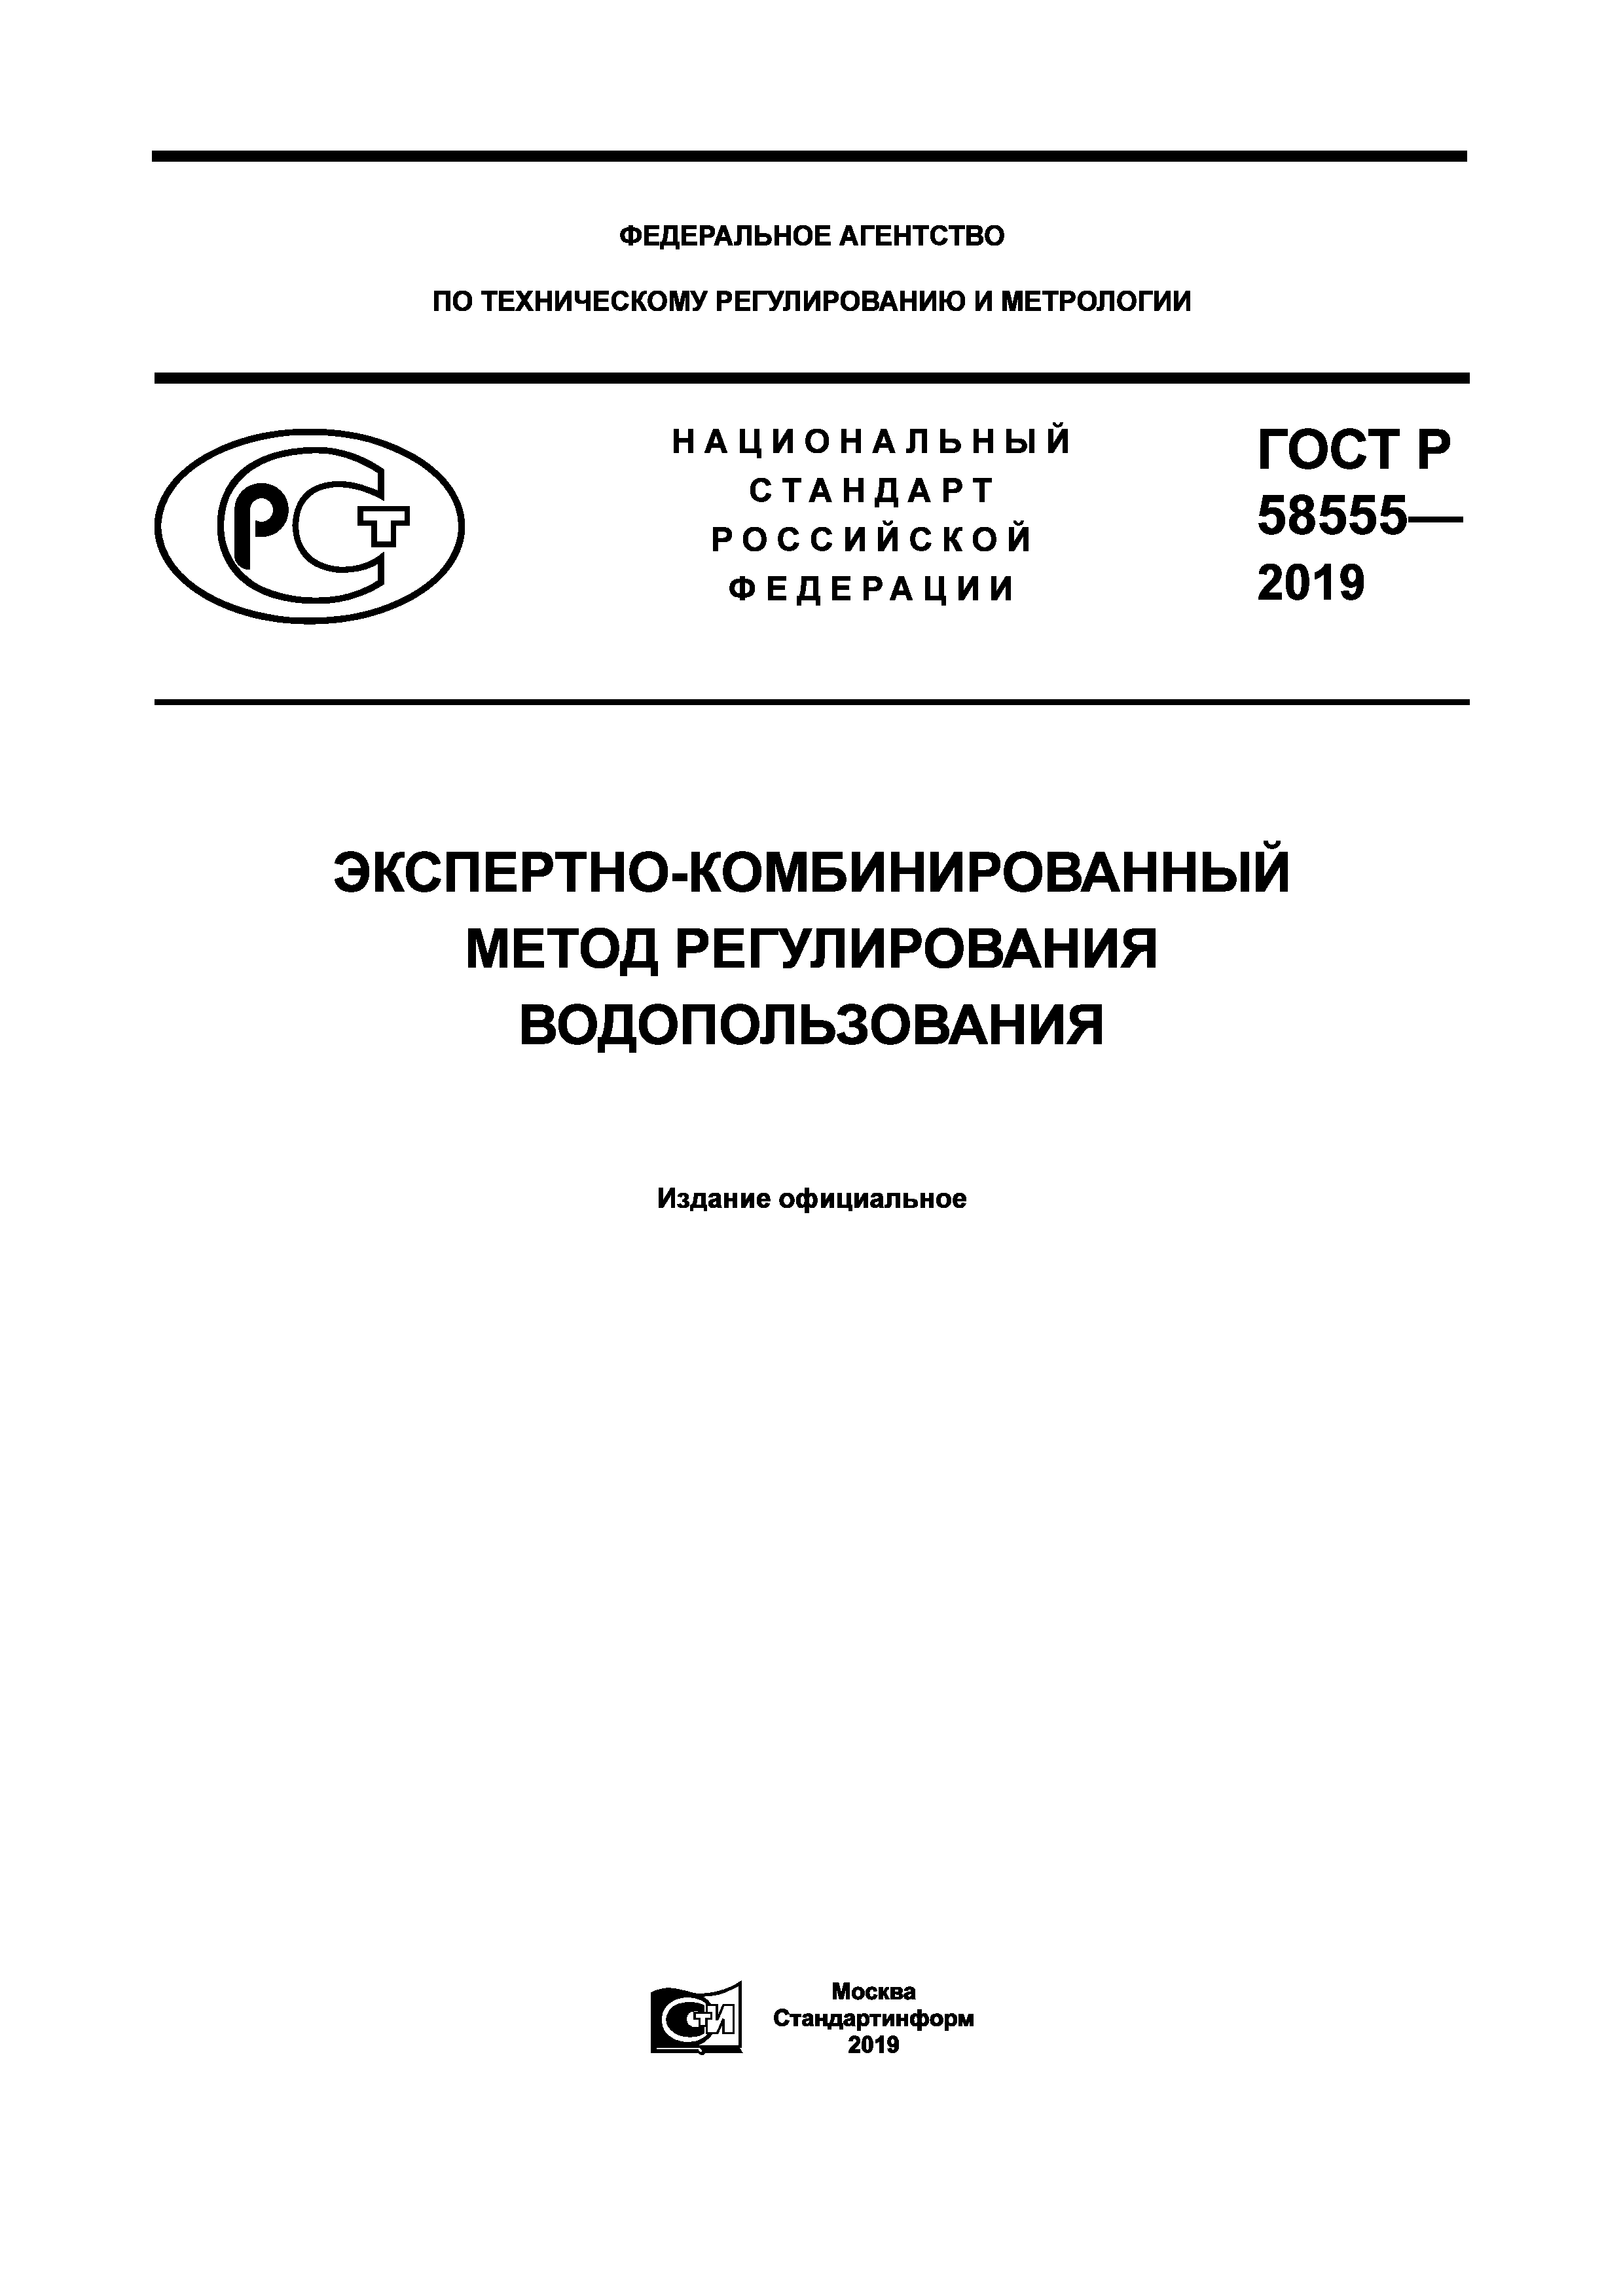 ГОСТ Р 58555-2019